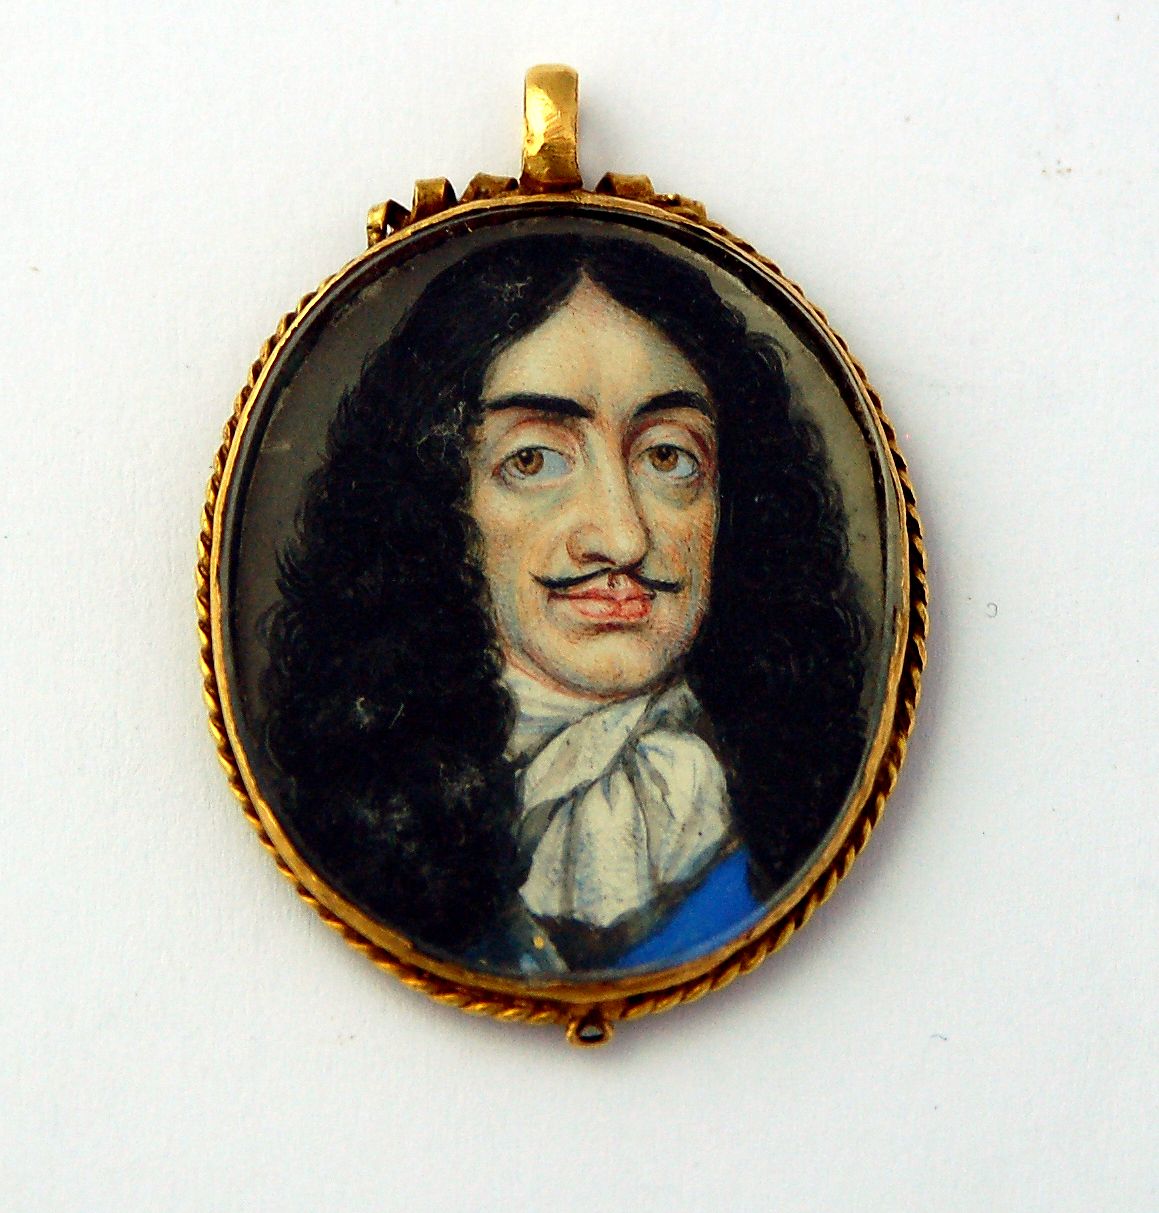 Miniature of Charles II